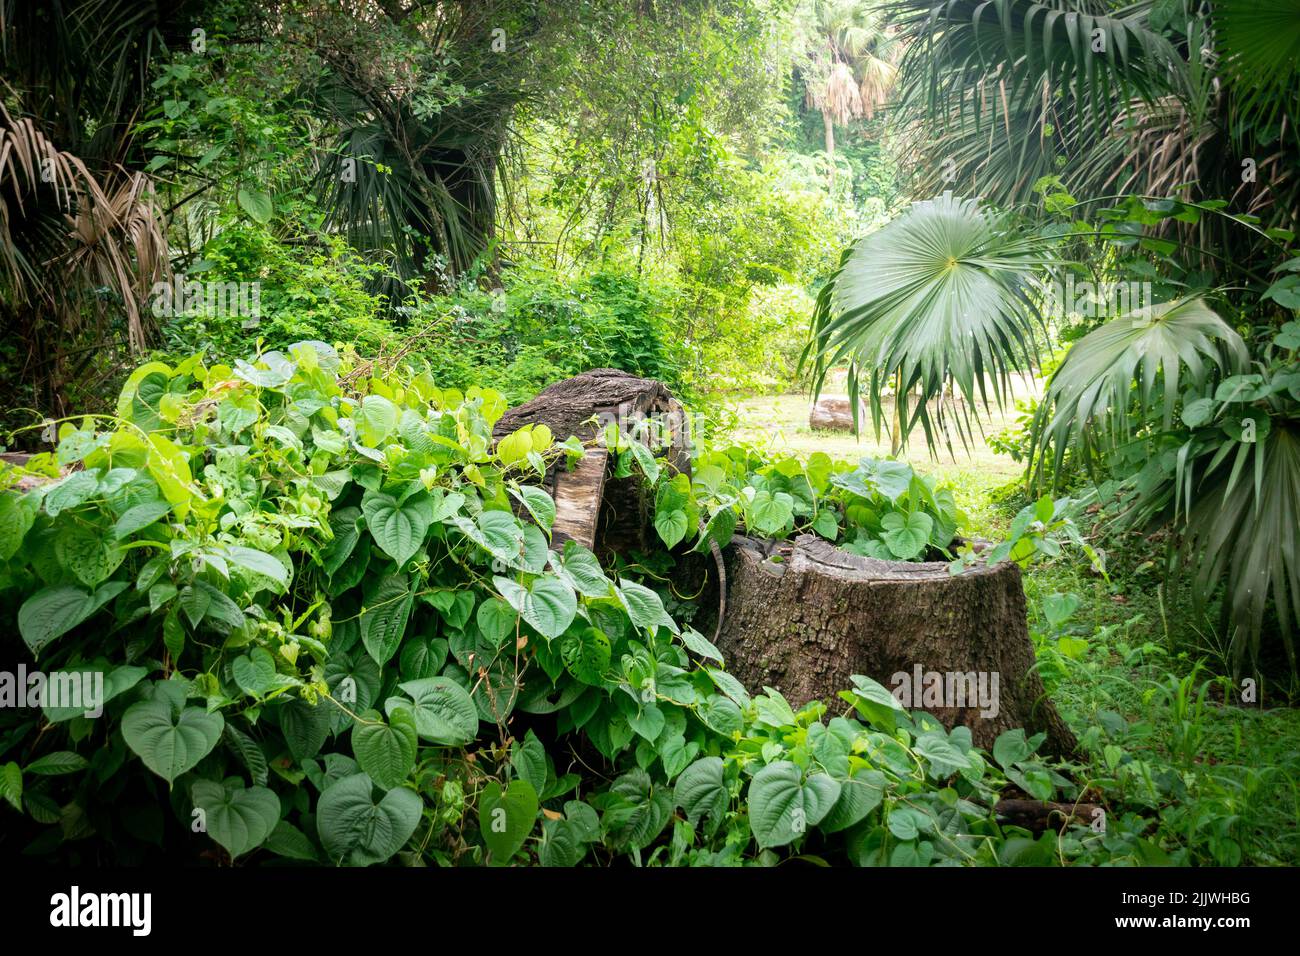 Florida tropical climate foliage forest  jungle scenery Stock Photo